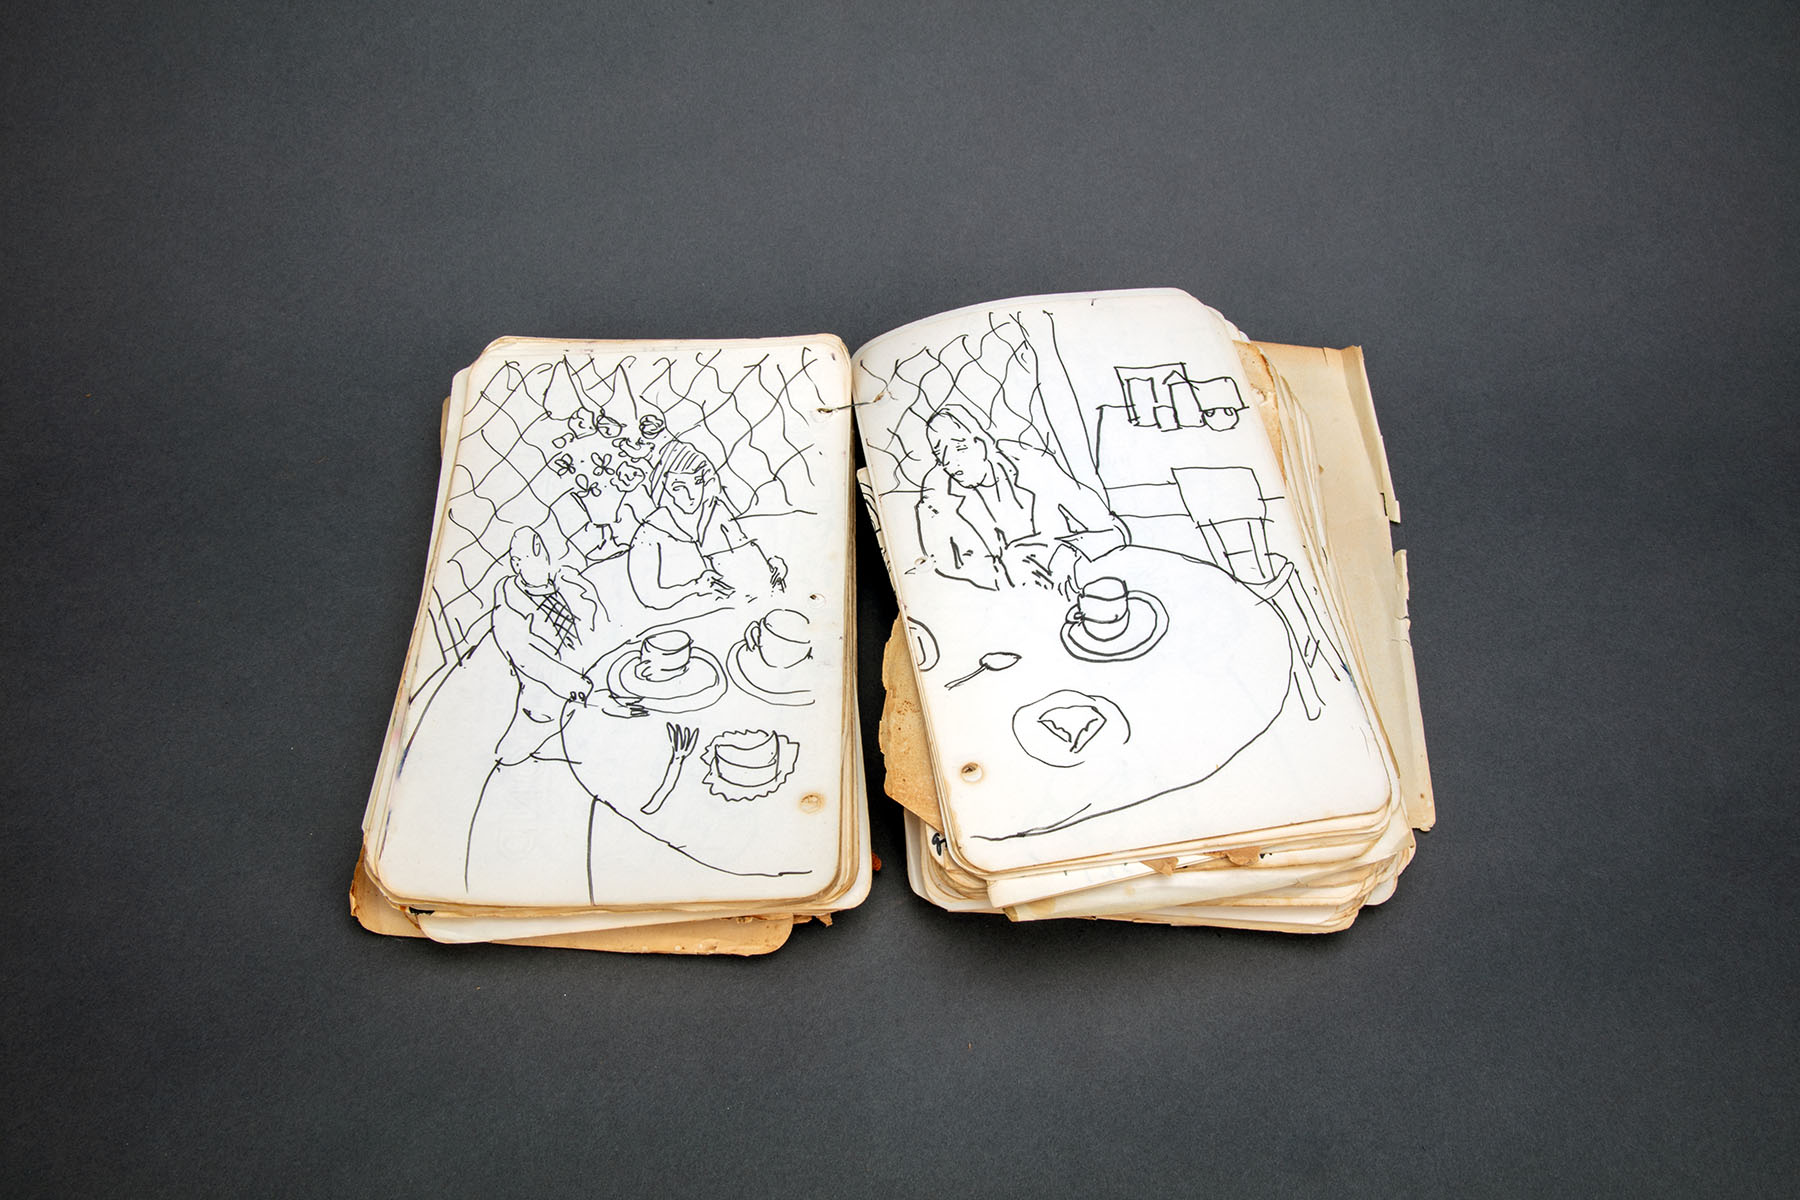 Sketchbooks from RAM's Collection: Exploring Process - Racine Art